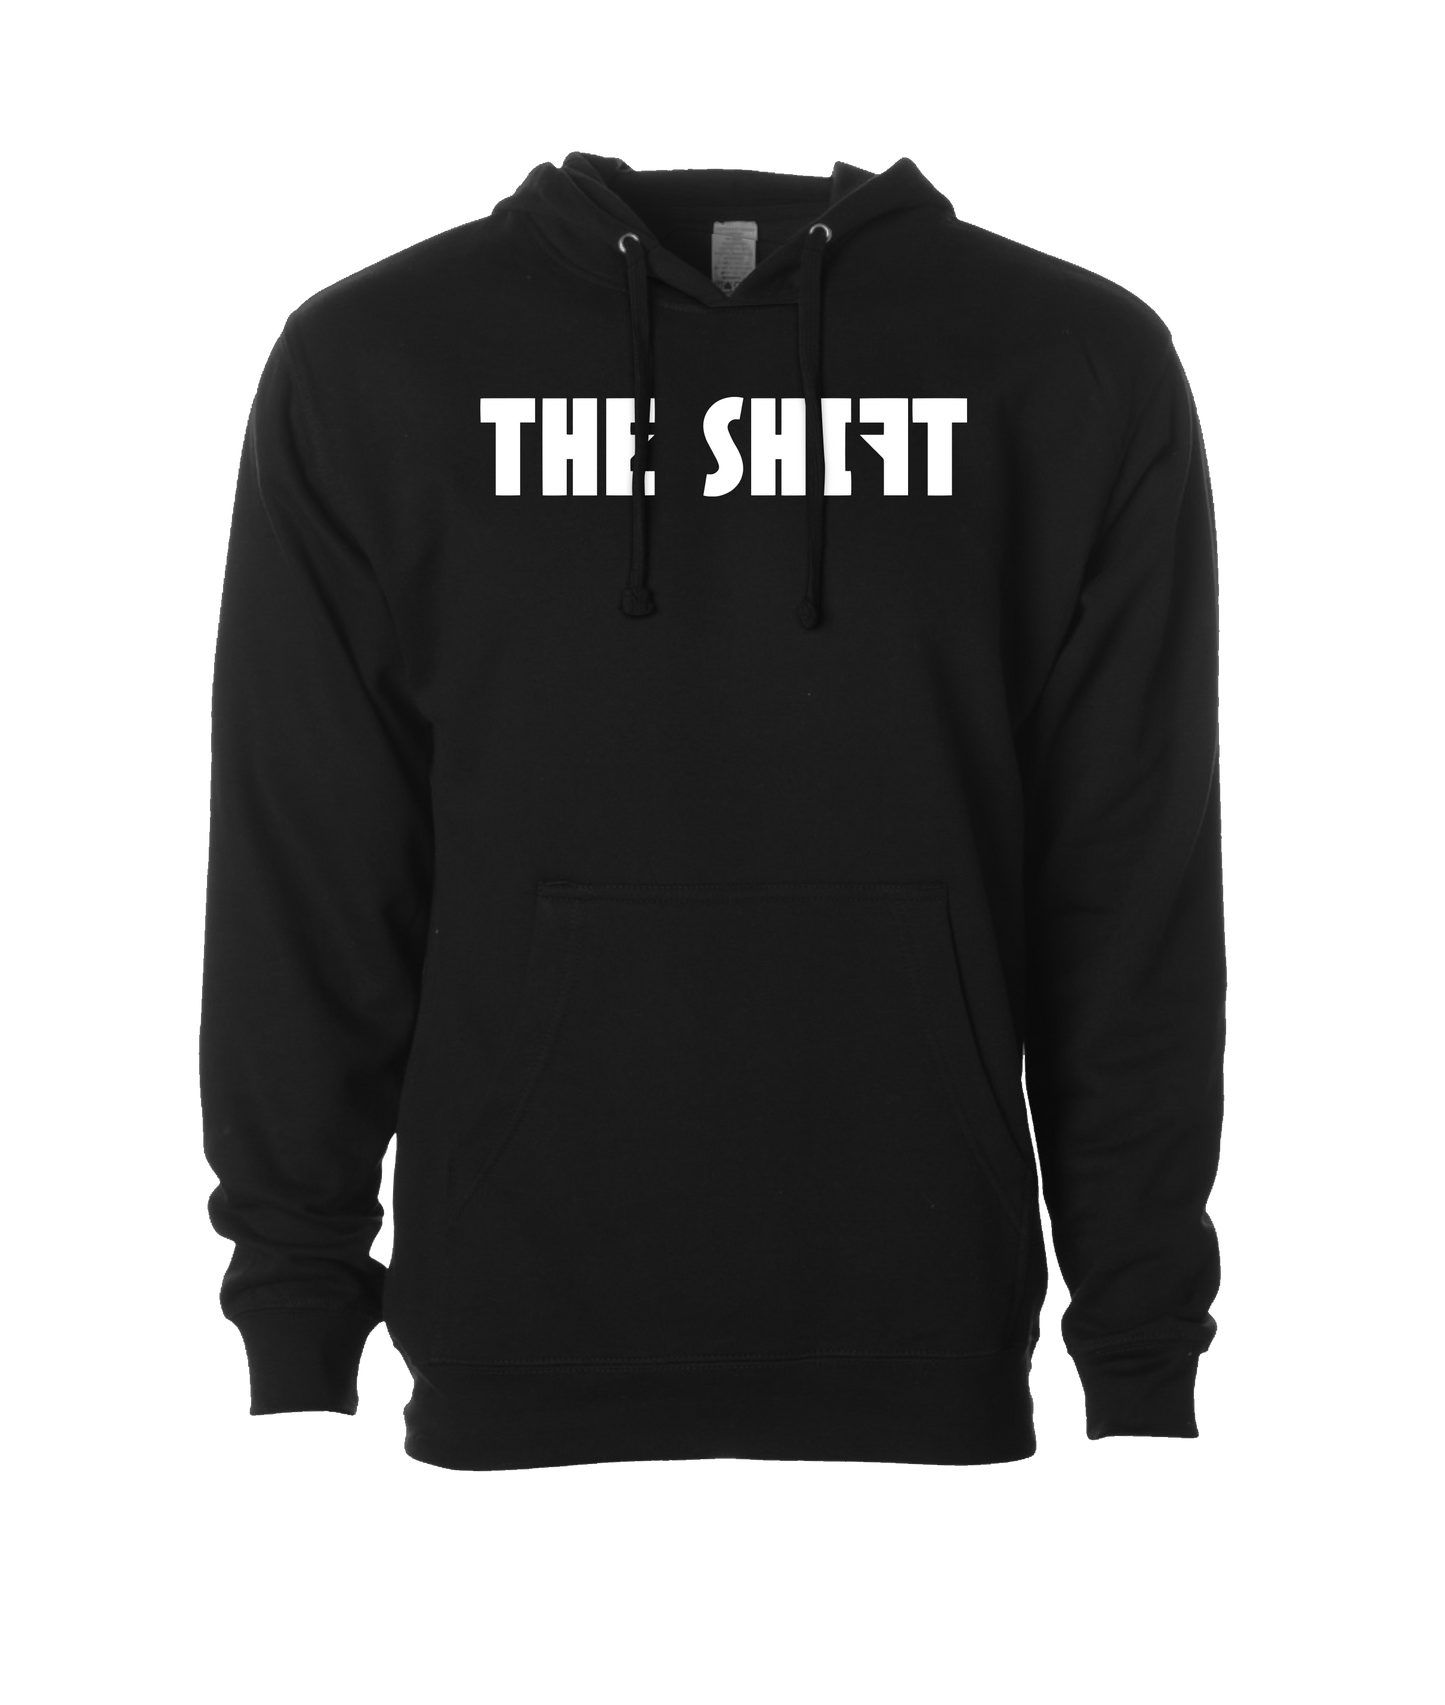 TheShift - Start The Shift - Black Hoodie